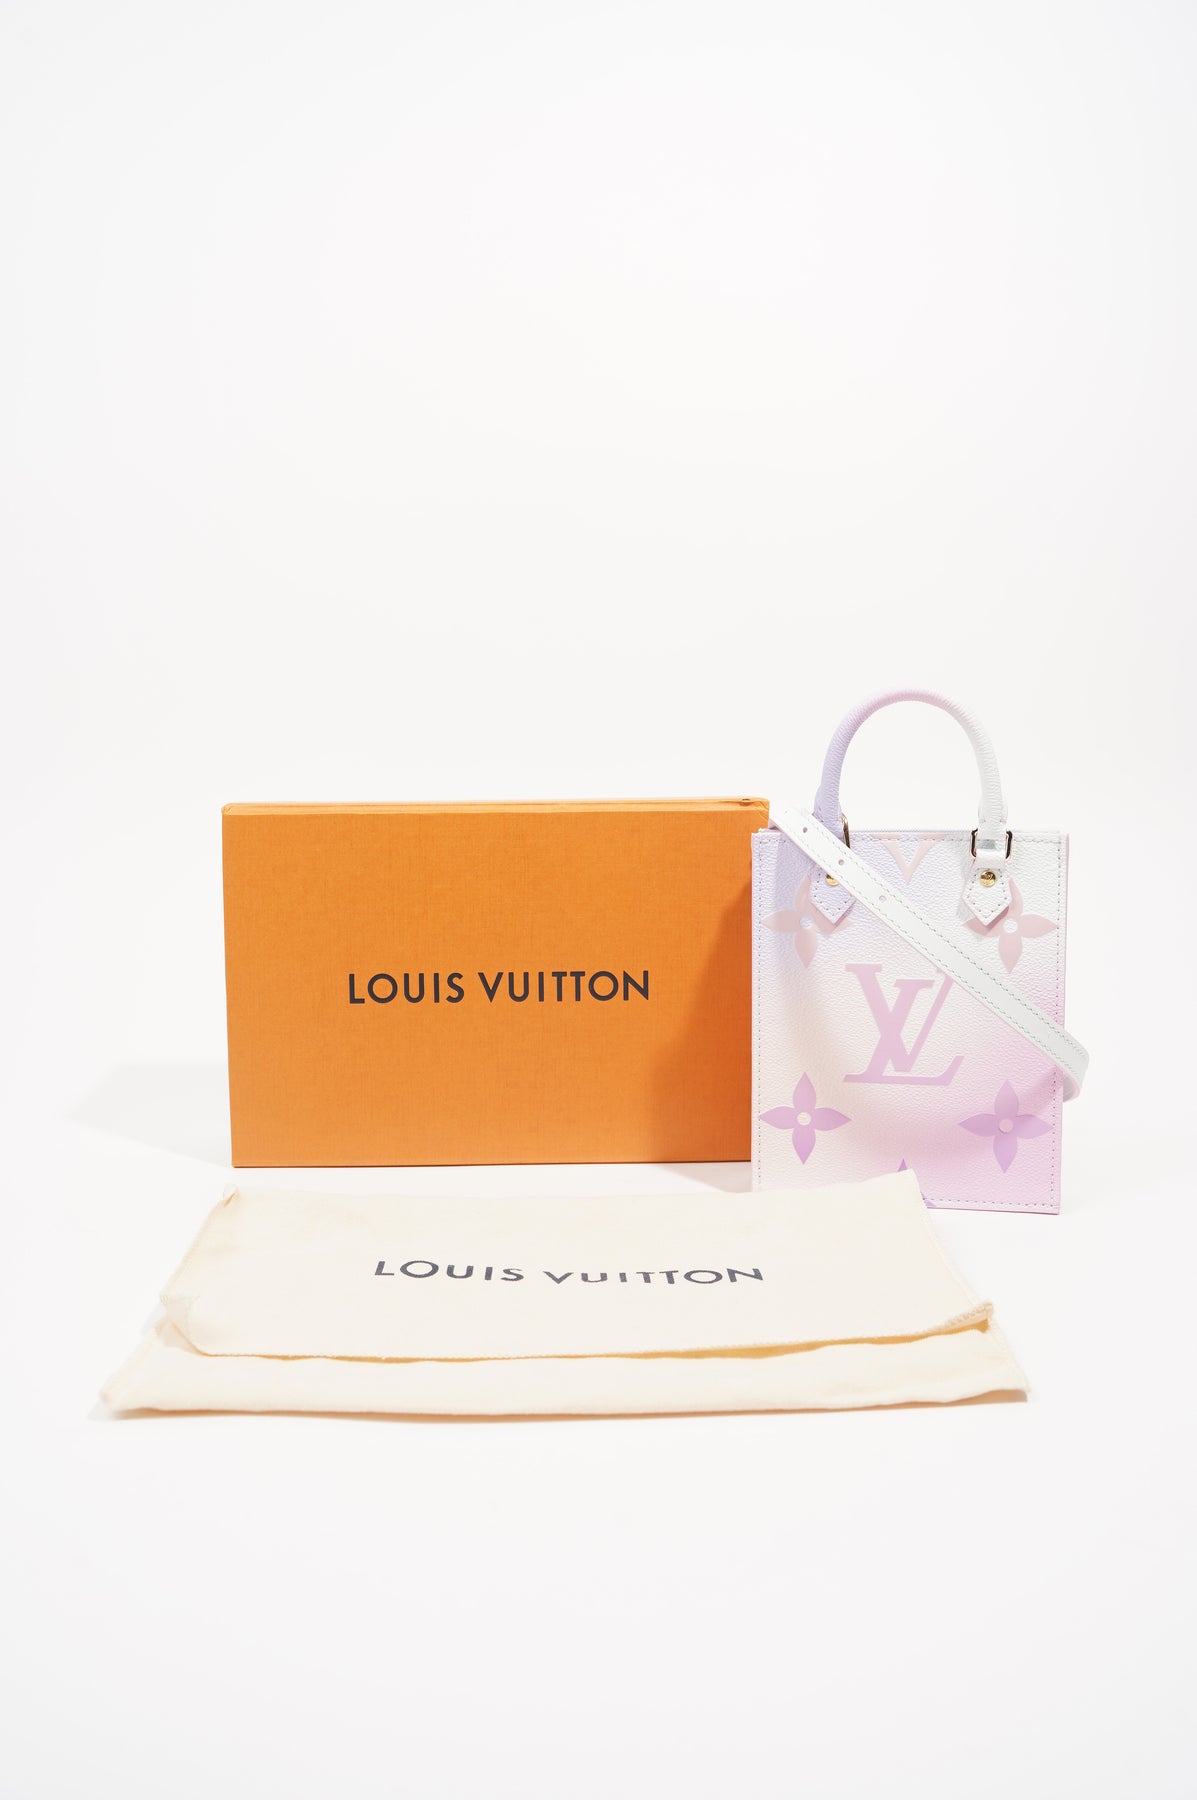 Louis Vuitton Petite Sac Plat, Sunrise Pastel, New in Box WA001